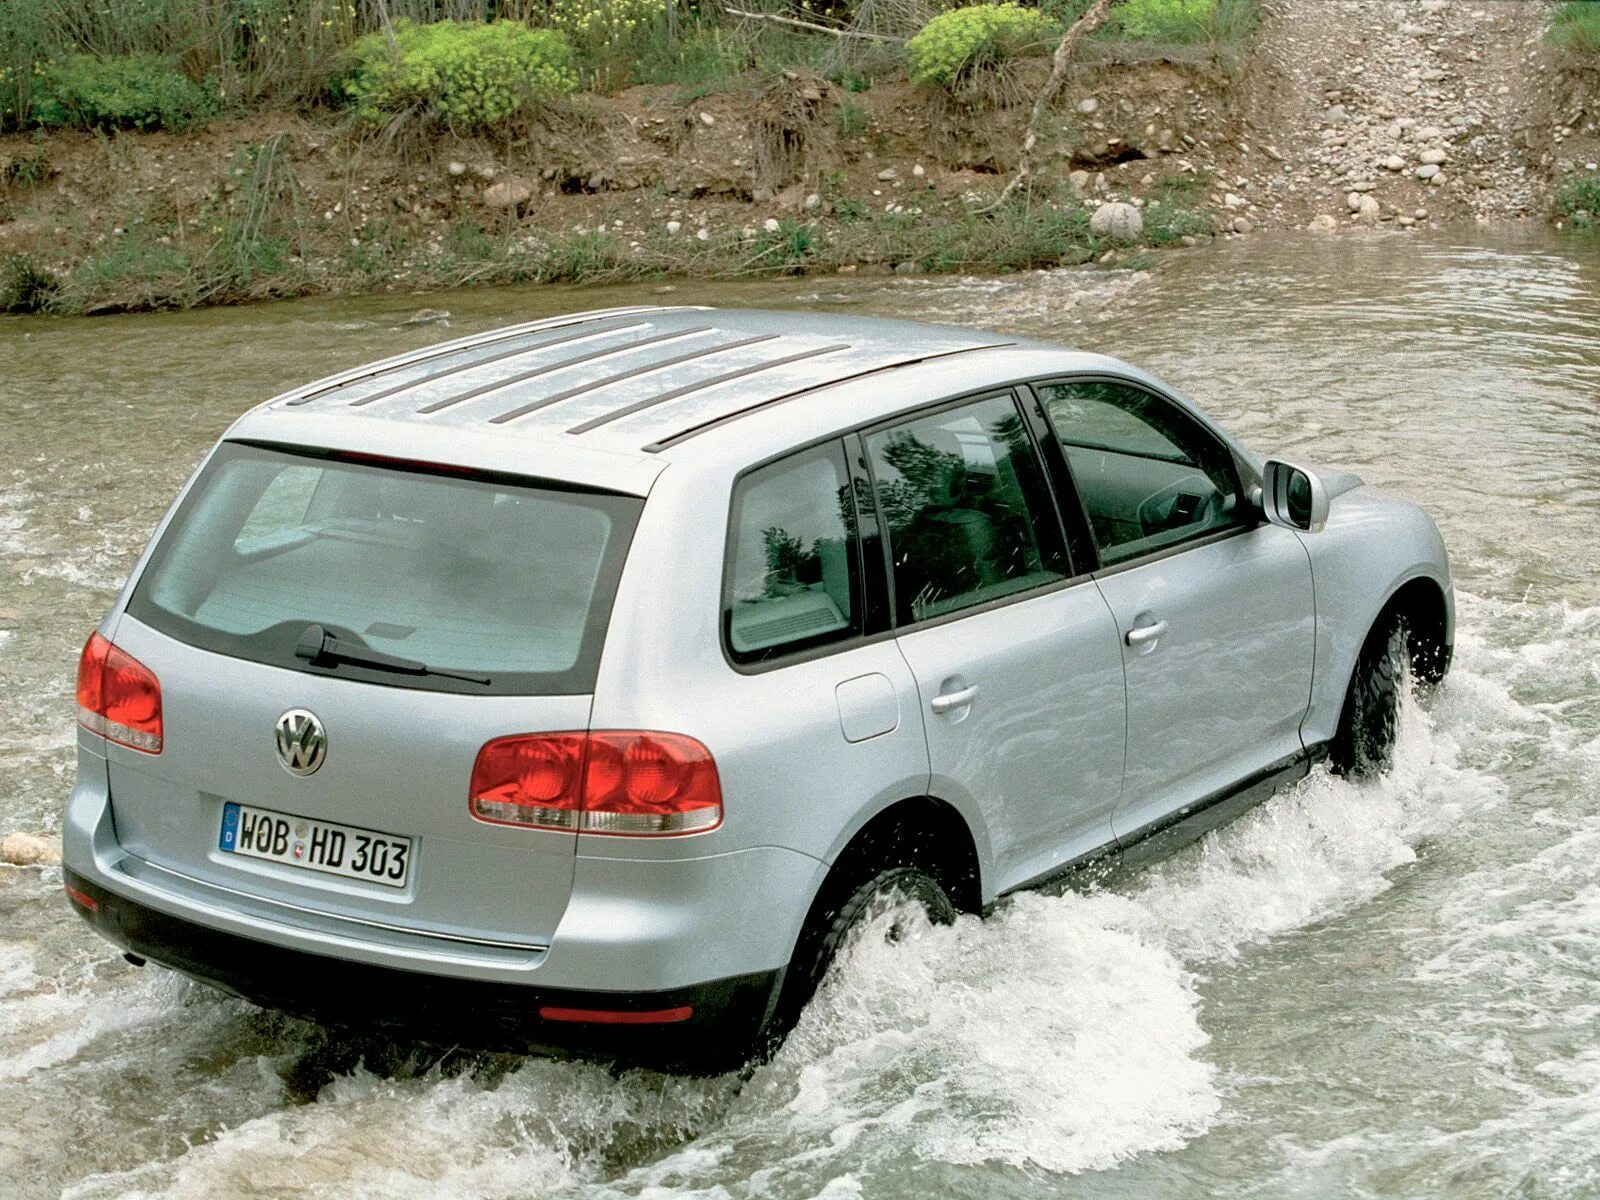 Volkswagen touareg 2003. Туарег 2003. Фольксваген Touareg 2003. Туарег 2003 v10. Touareg 2003 2,5 v10.